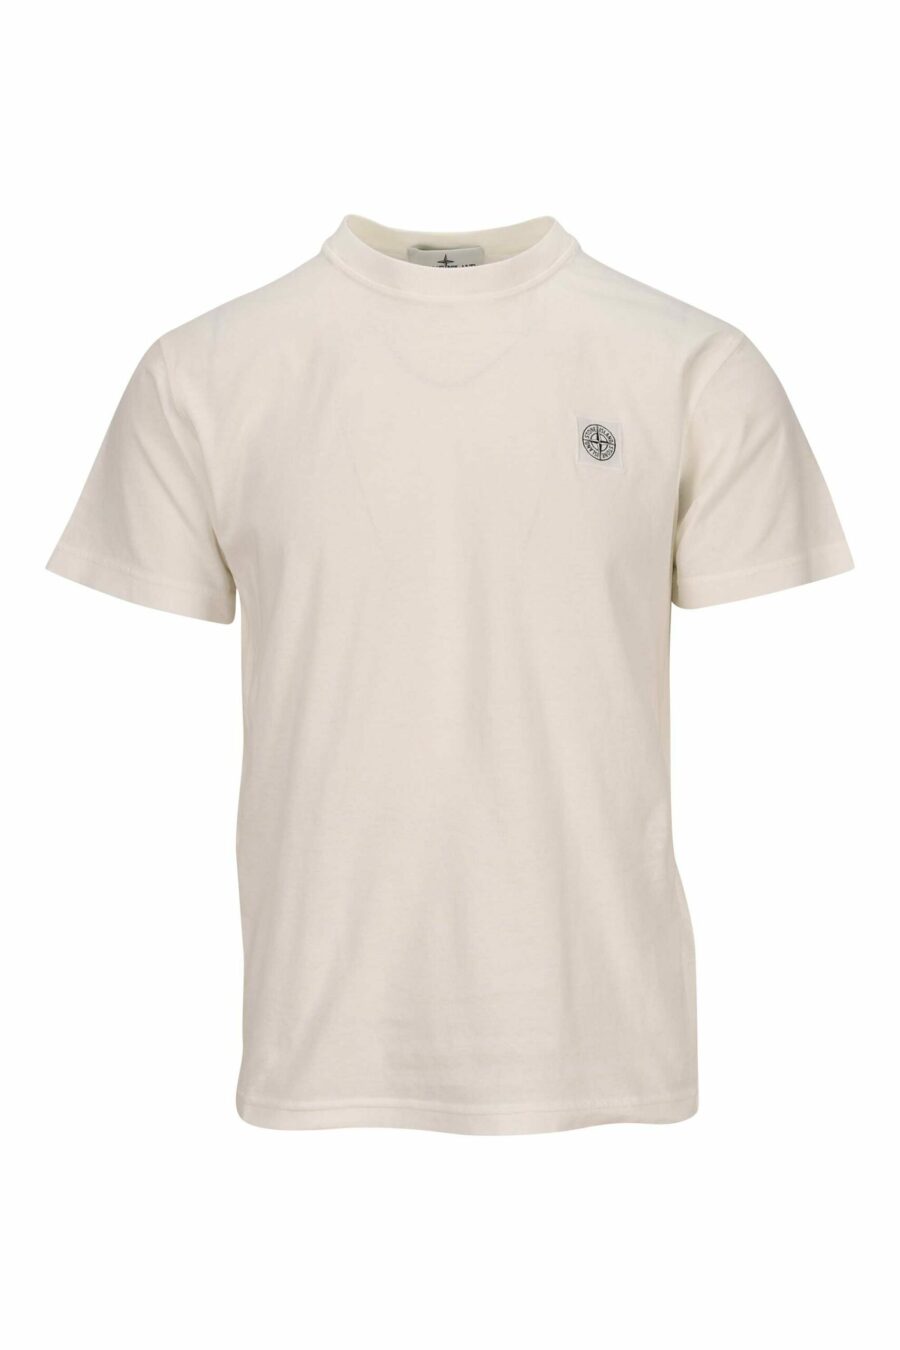 Camiseta blanca con minilogo brújula - 8052572902222 scaled